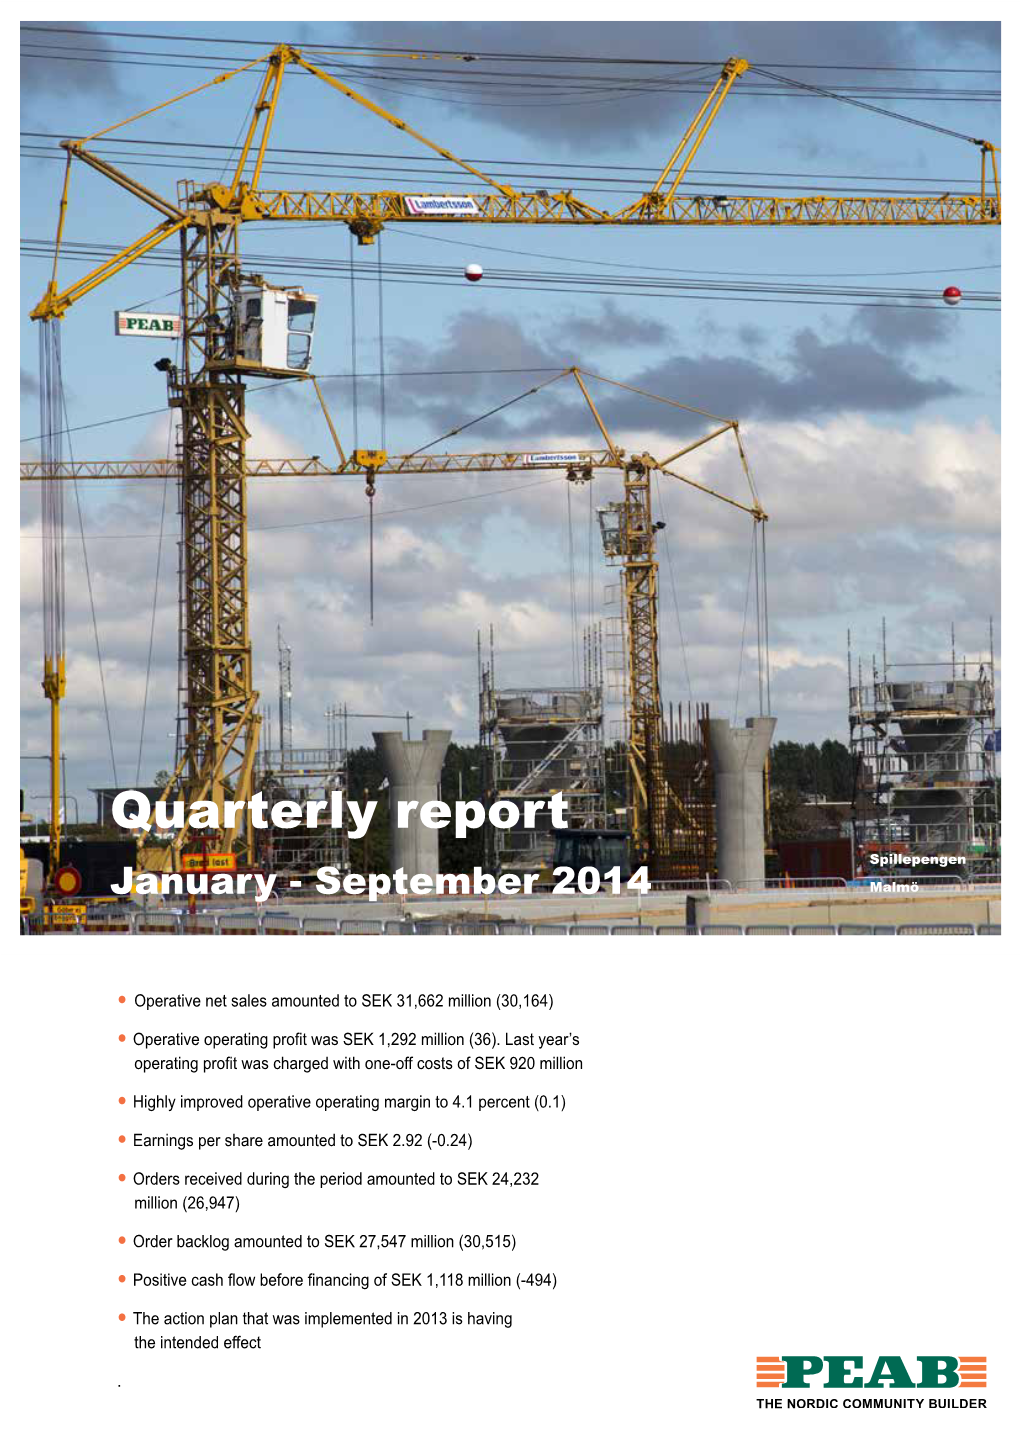 Quarterly Report Spillepengen January - September 2014 Malmö